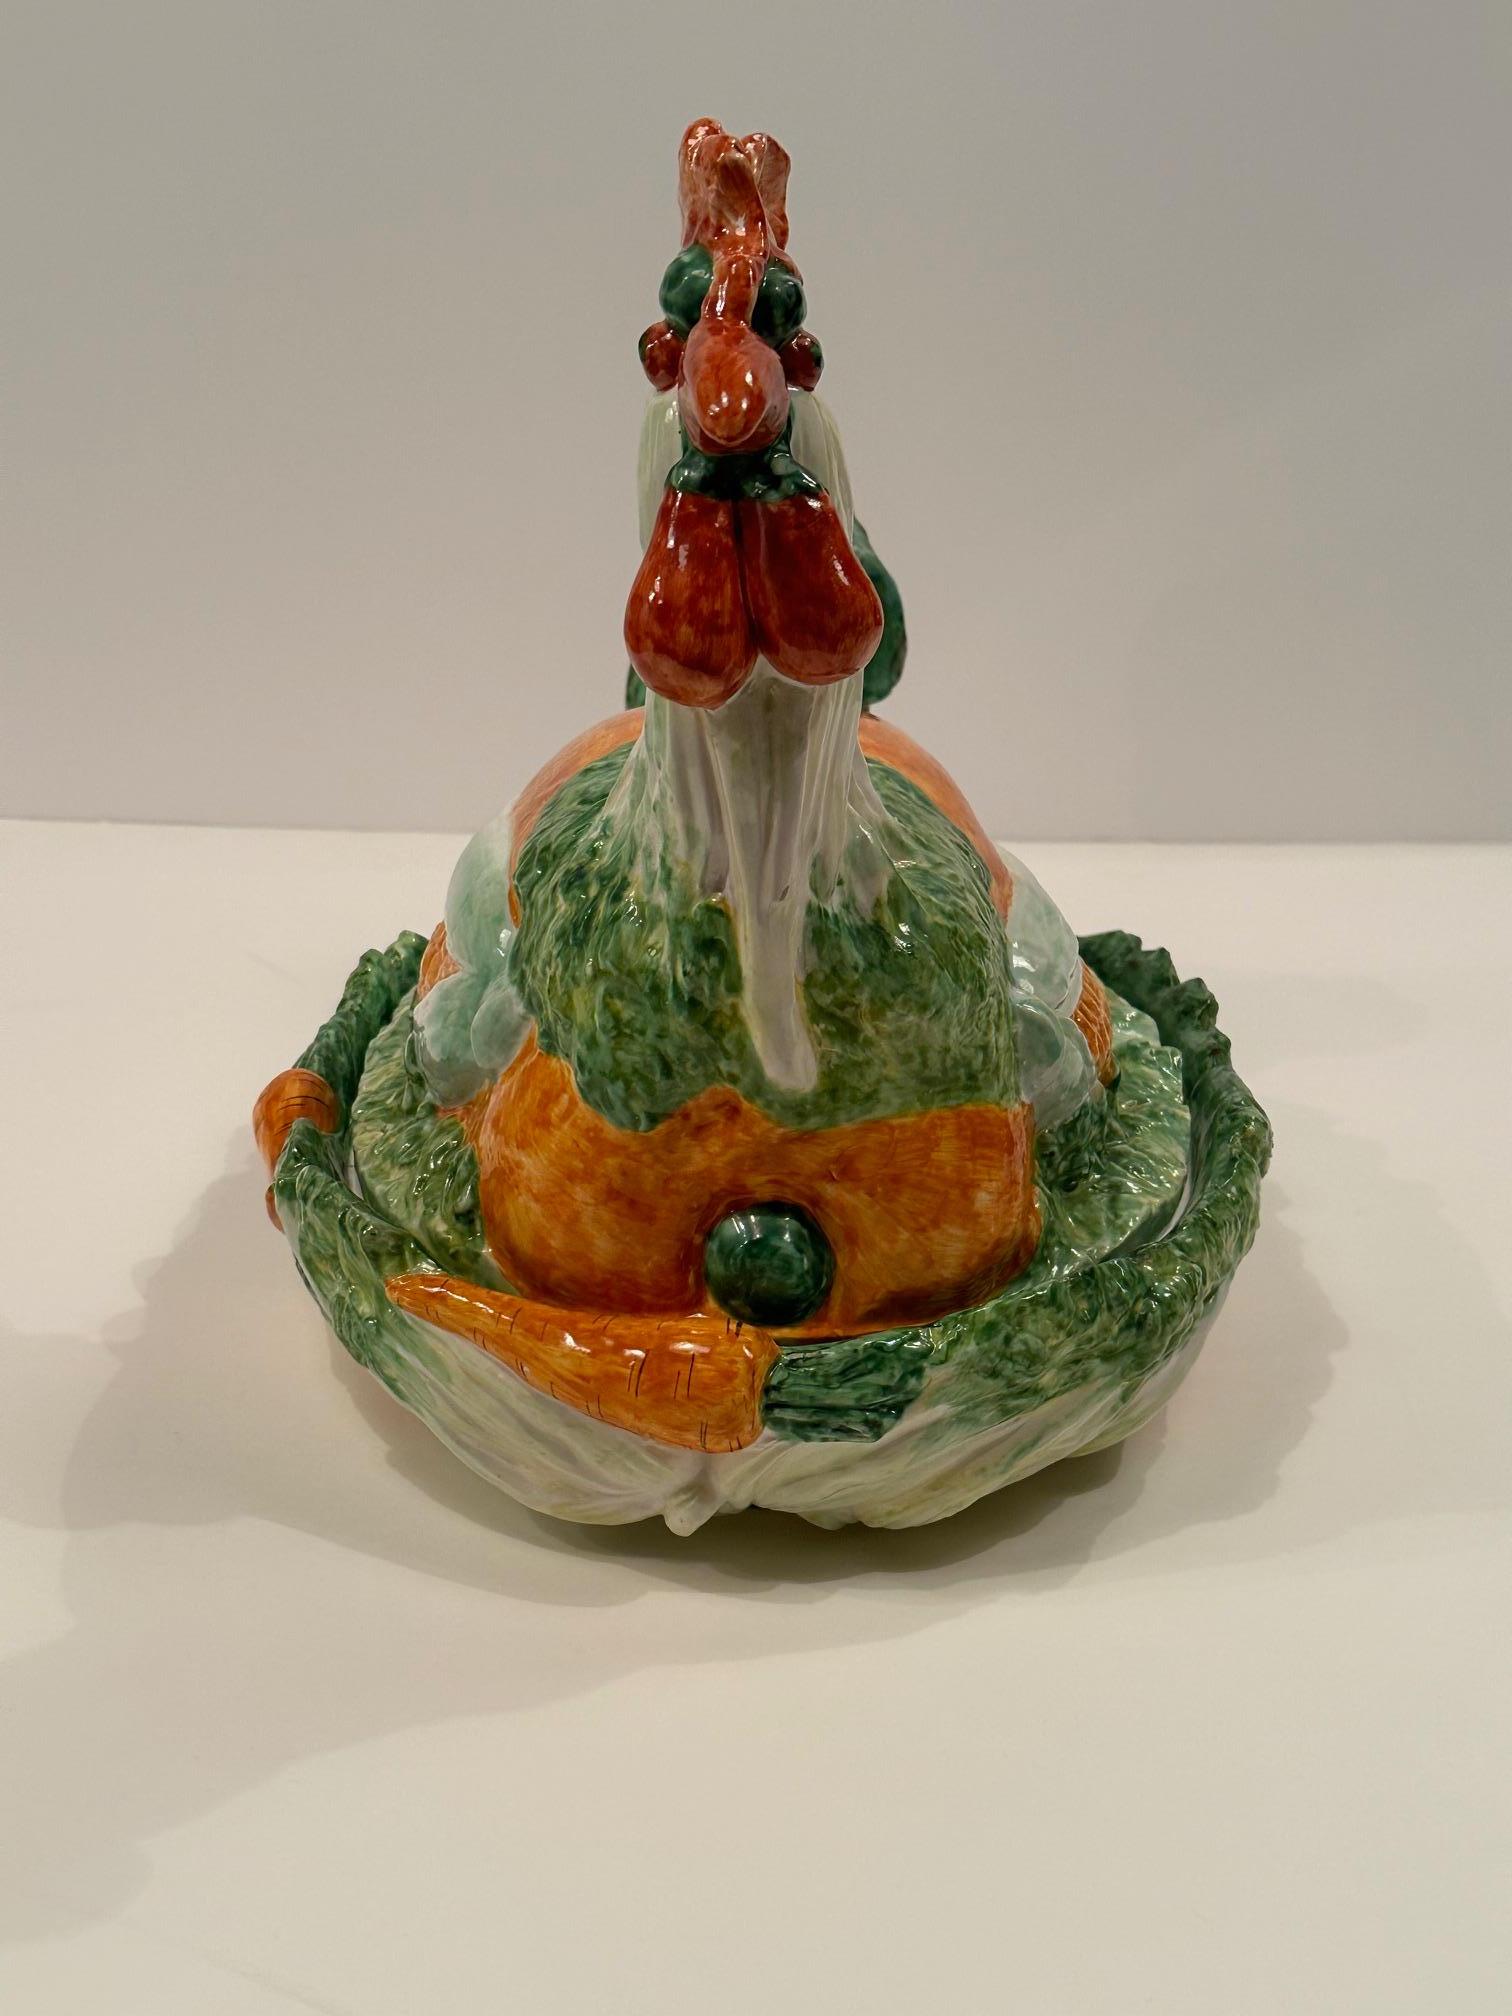 Marvelous Italian Ceramic Majolica Rooster and Vegetable Tureen For Sale 4